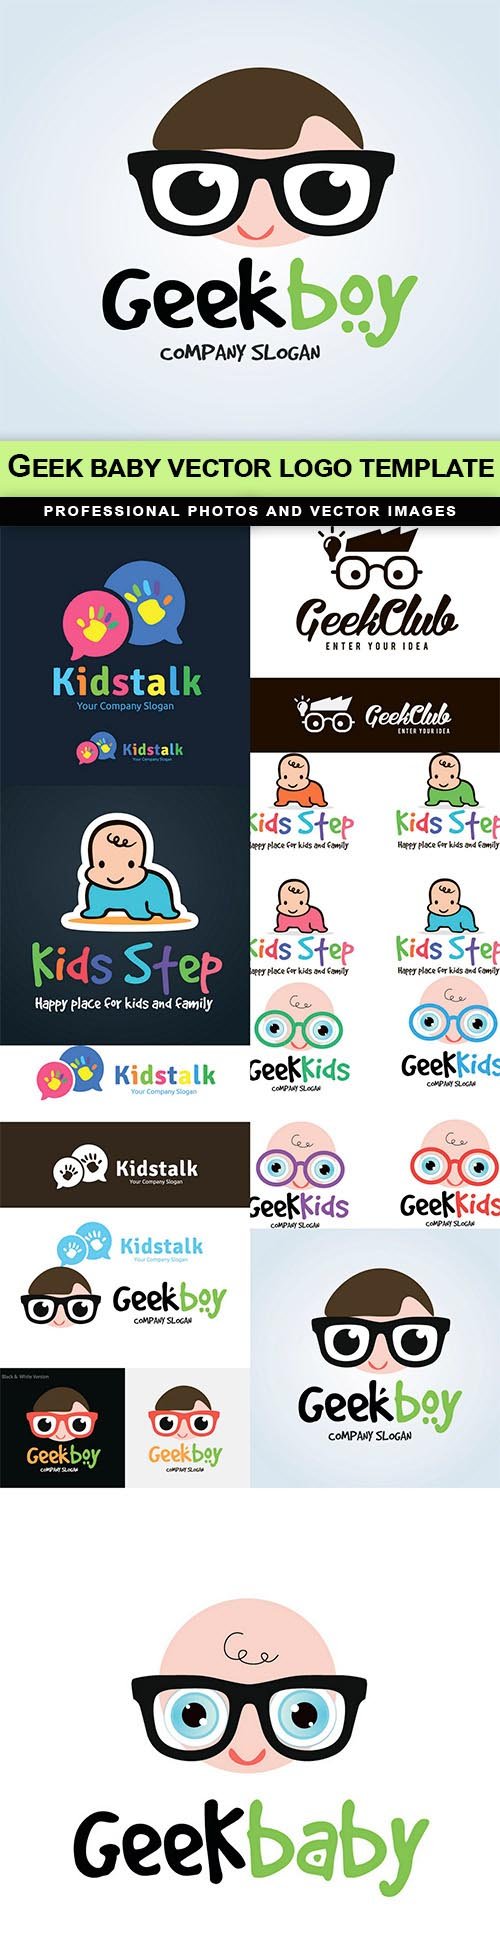 Geek baby vector logo template - 10 EPS